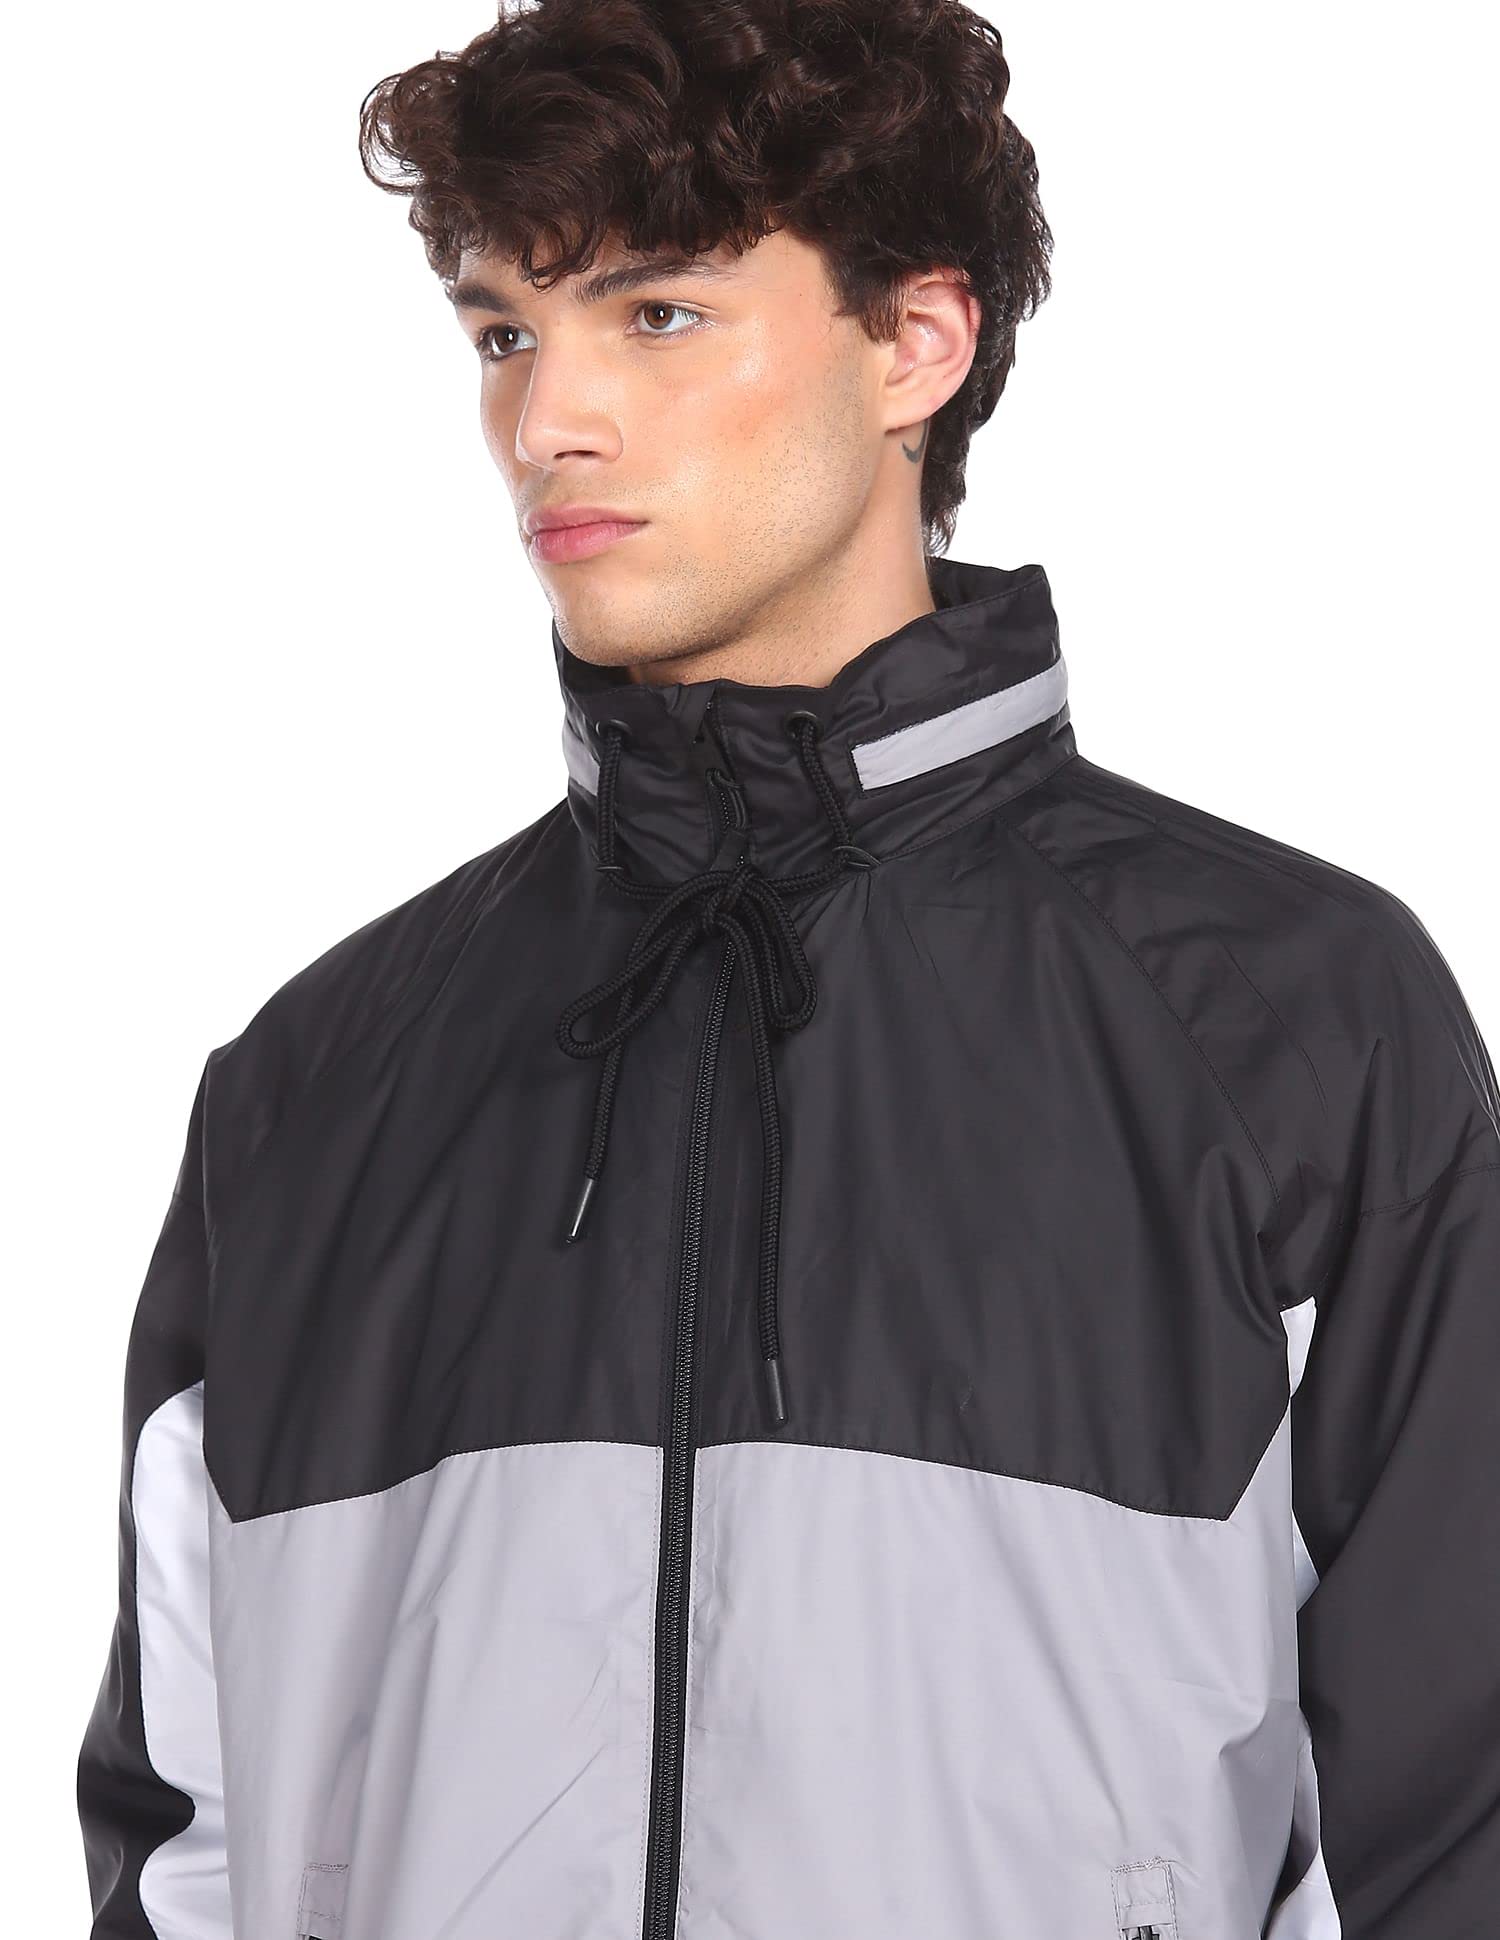 AEROPOSTALE Men's Wrap Coat (Black and Grey) 